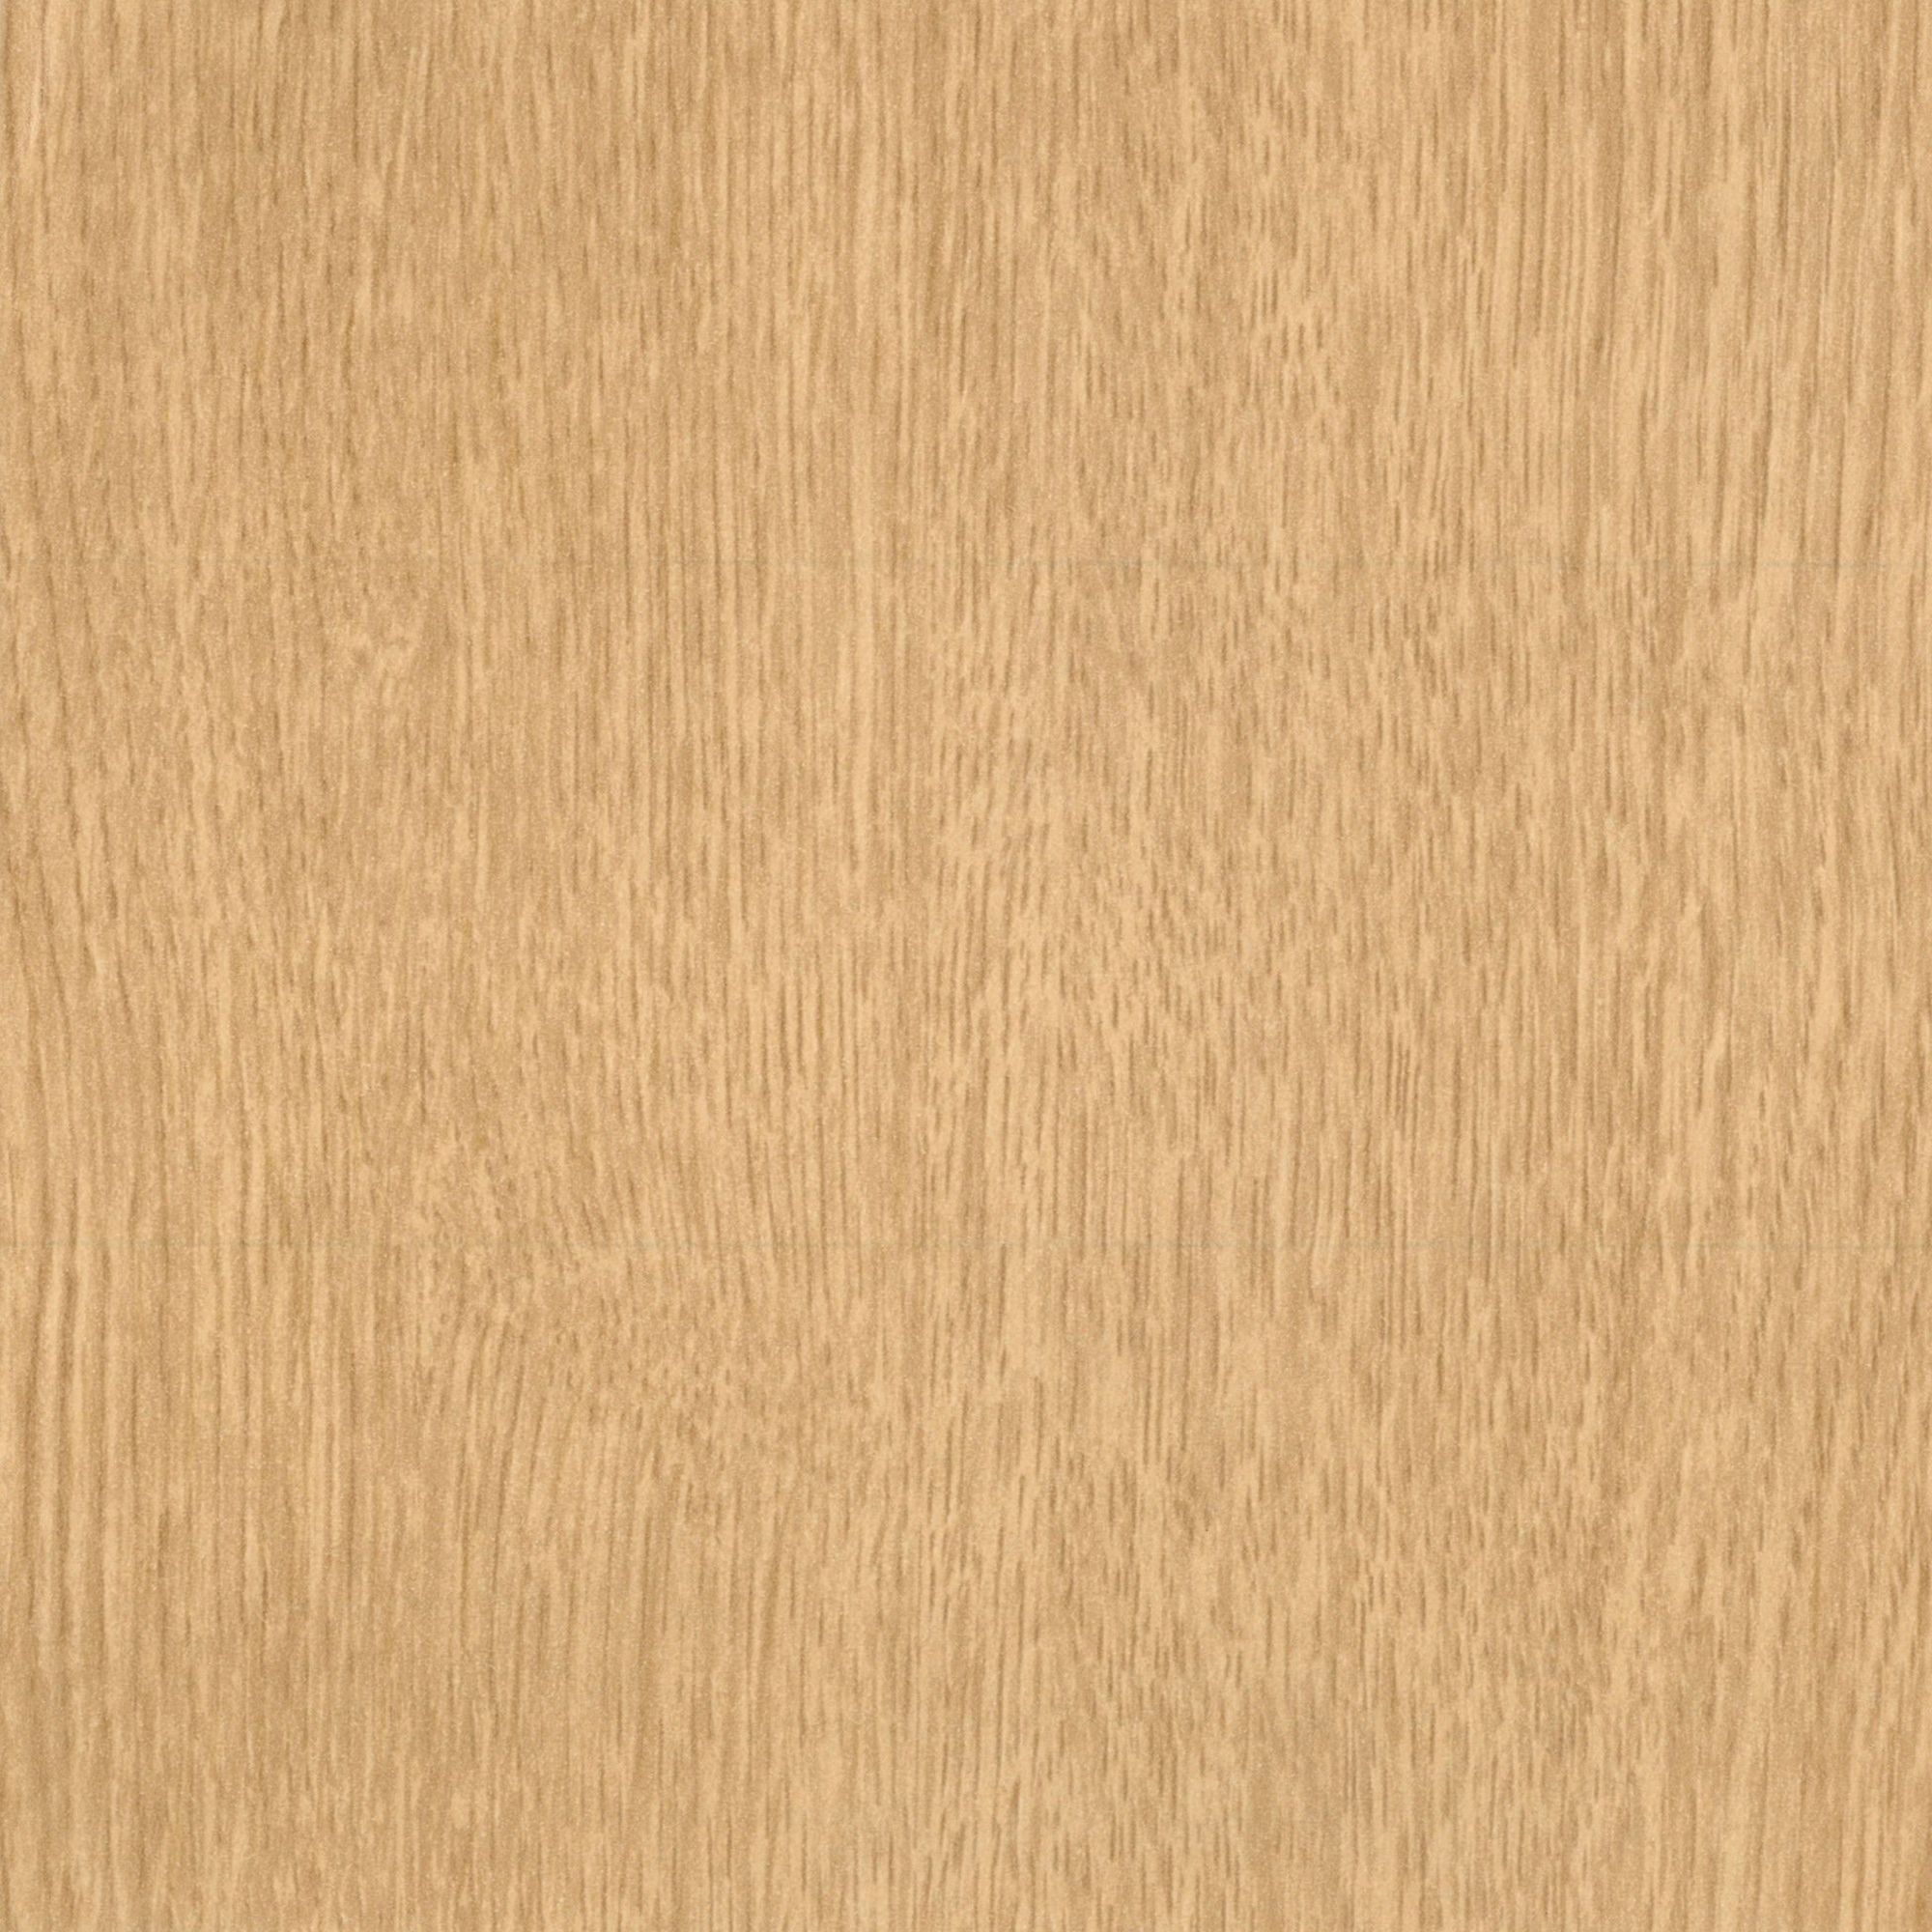 GoodHome FU026 Tan Wood effect Scotia trim, 220cm